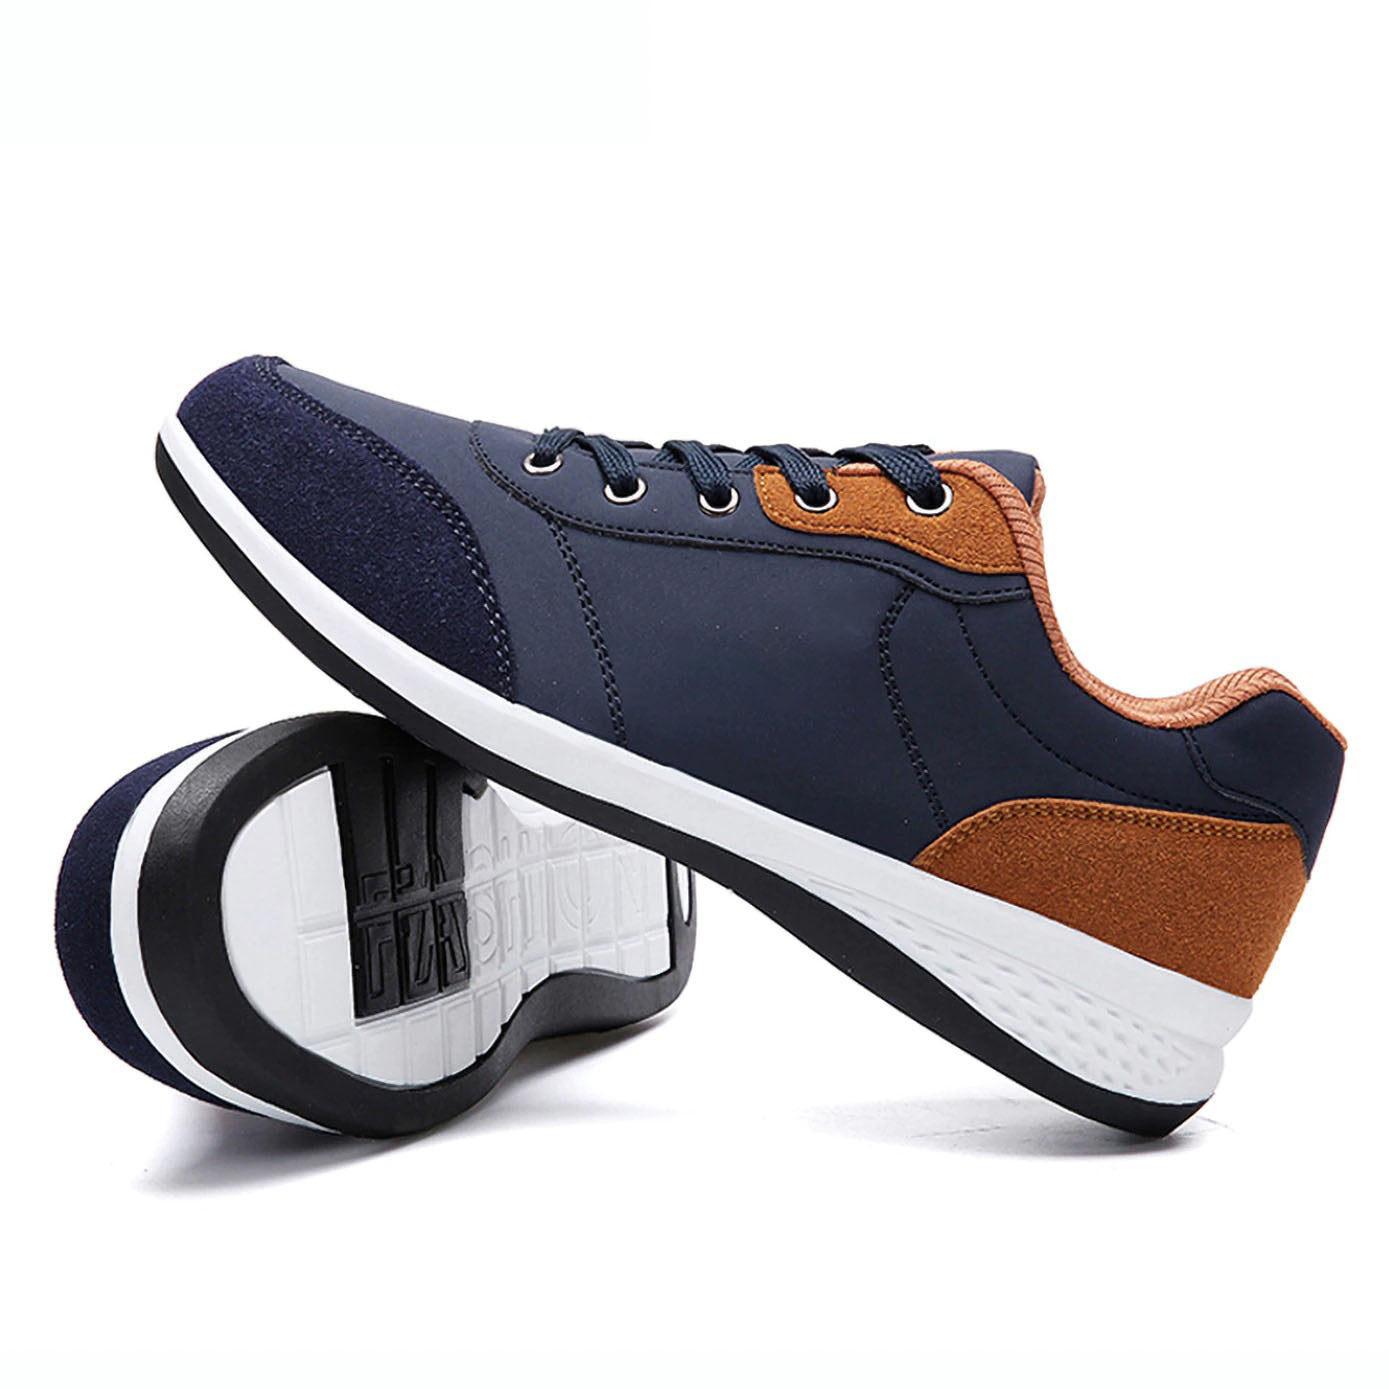 azfleek Orthopedic Shoes Lace-Up Men Sneakers Trekking Jogging Walking Microfiber Leather Casual Blue / 6.5